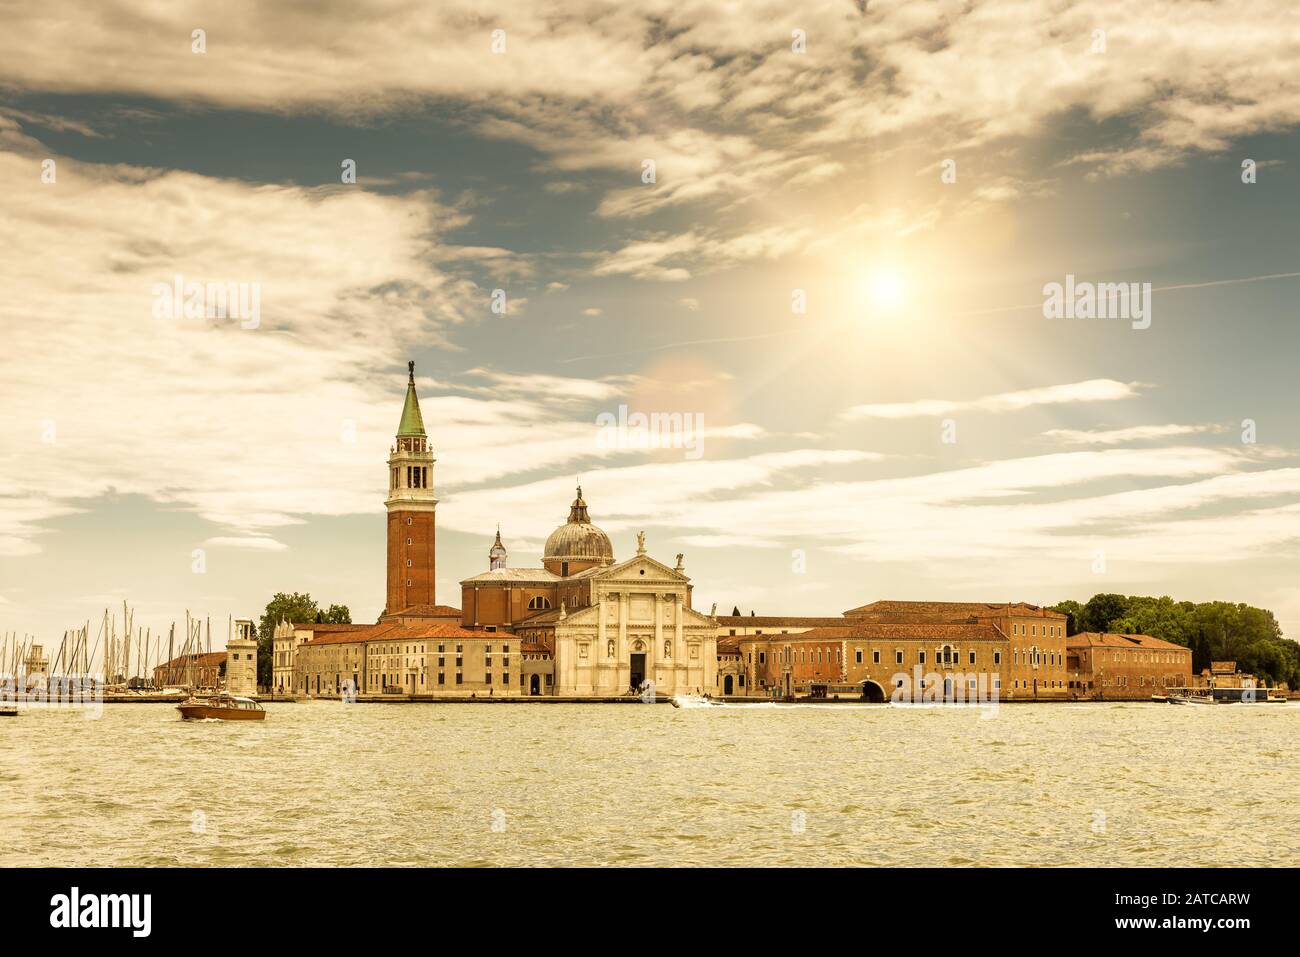 Insel San Giorgio Maggiore, Venedig, Italien. Blick auf Venedig bei Sonnenschein. Romantische Wasserreise in Venedig. Sonniger Blick auf Venedig am Sommertag. Stockfoto